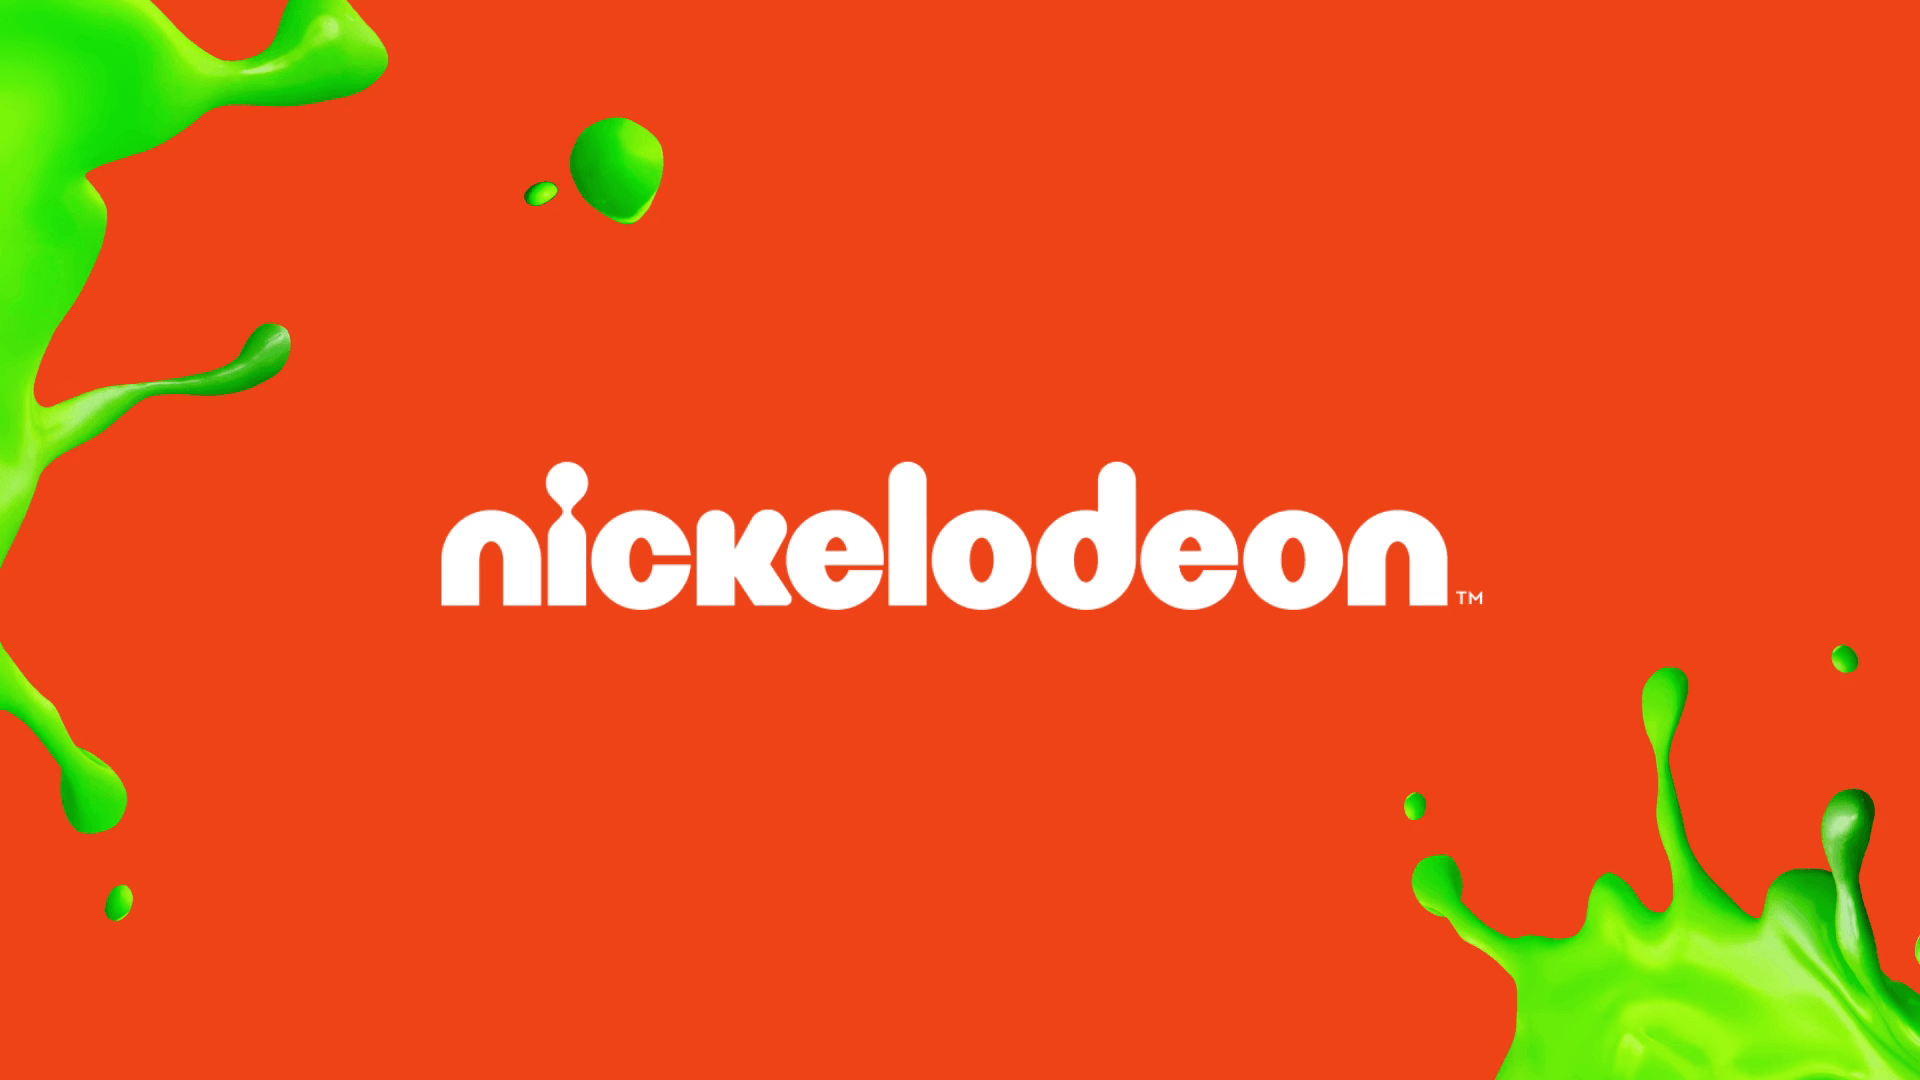 Nikelodeon Logo - Image - Nickelodeon-2016-logo-with-slime-nick.png | Logopedia ...